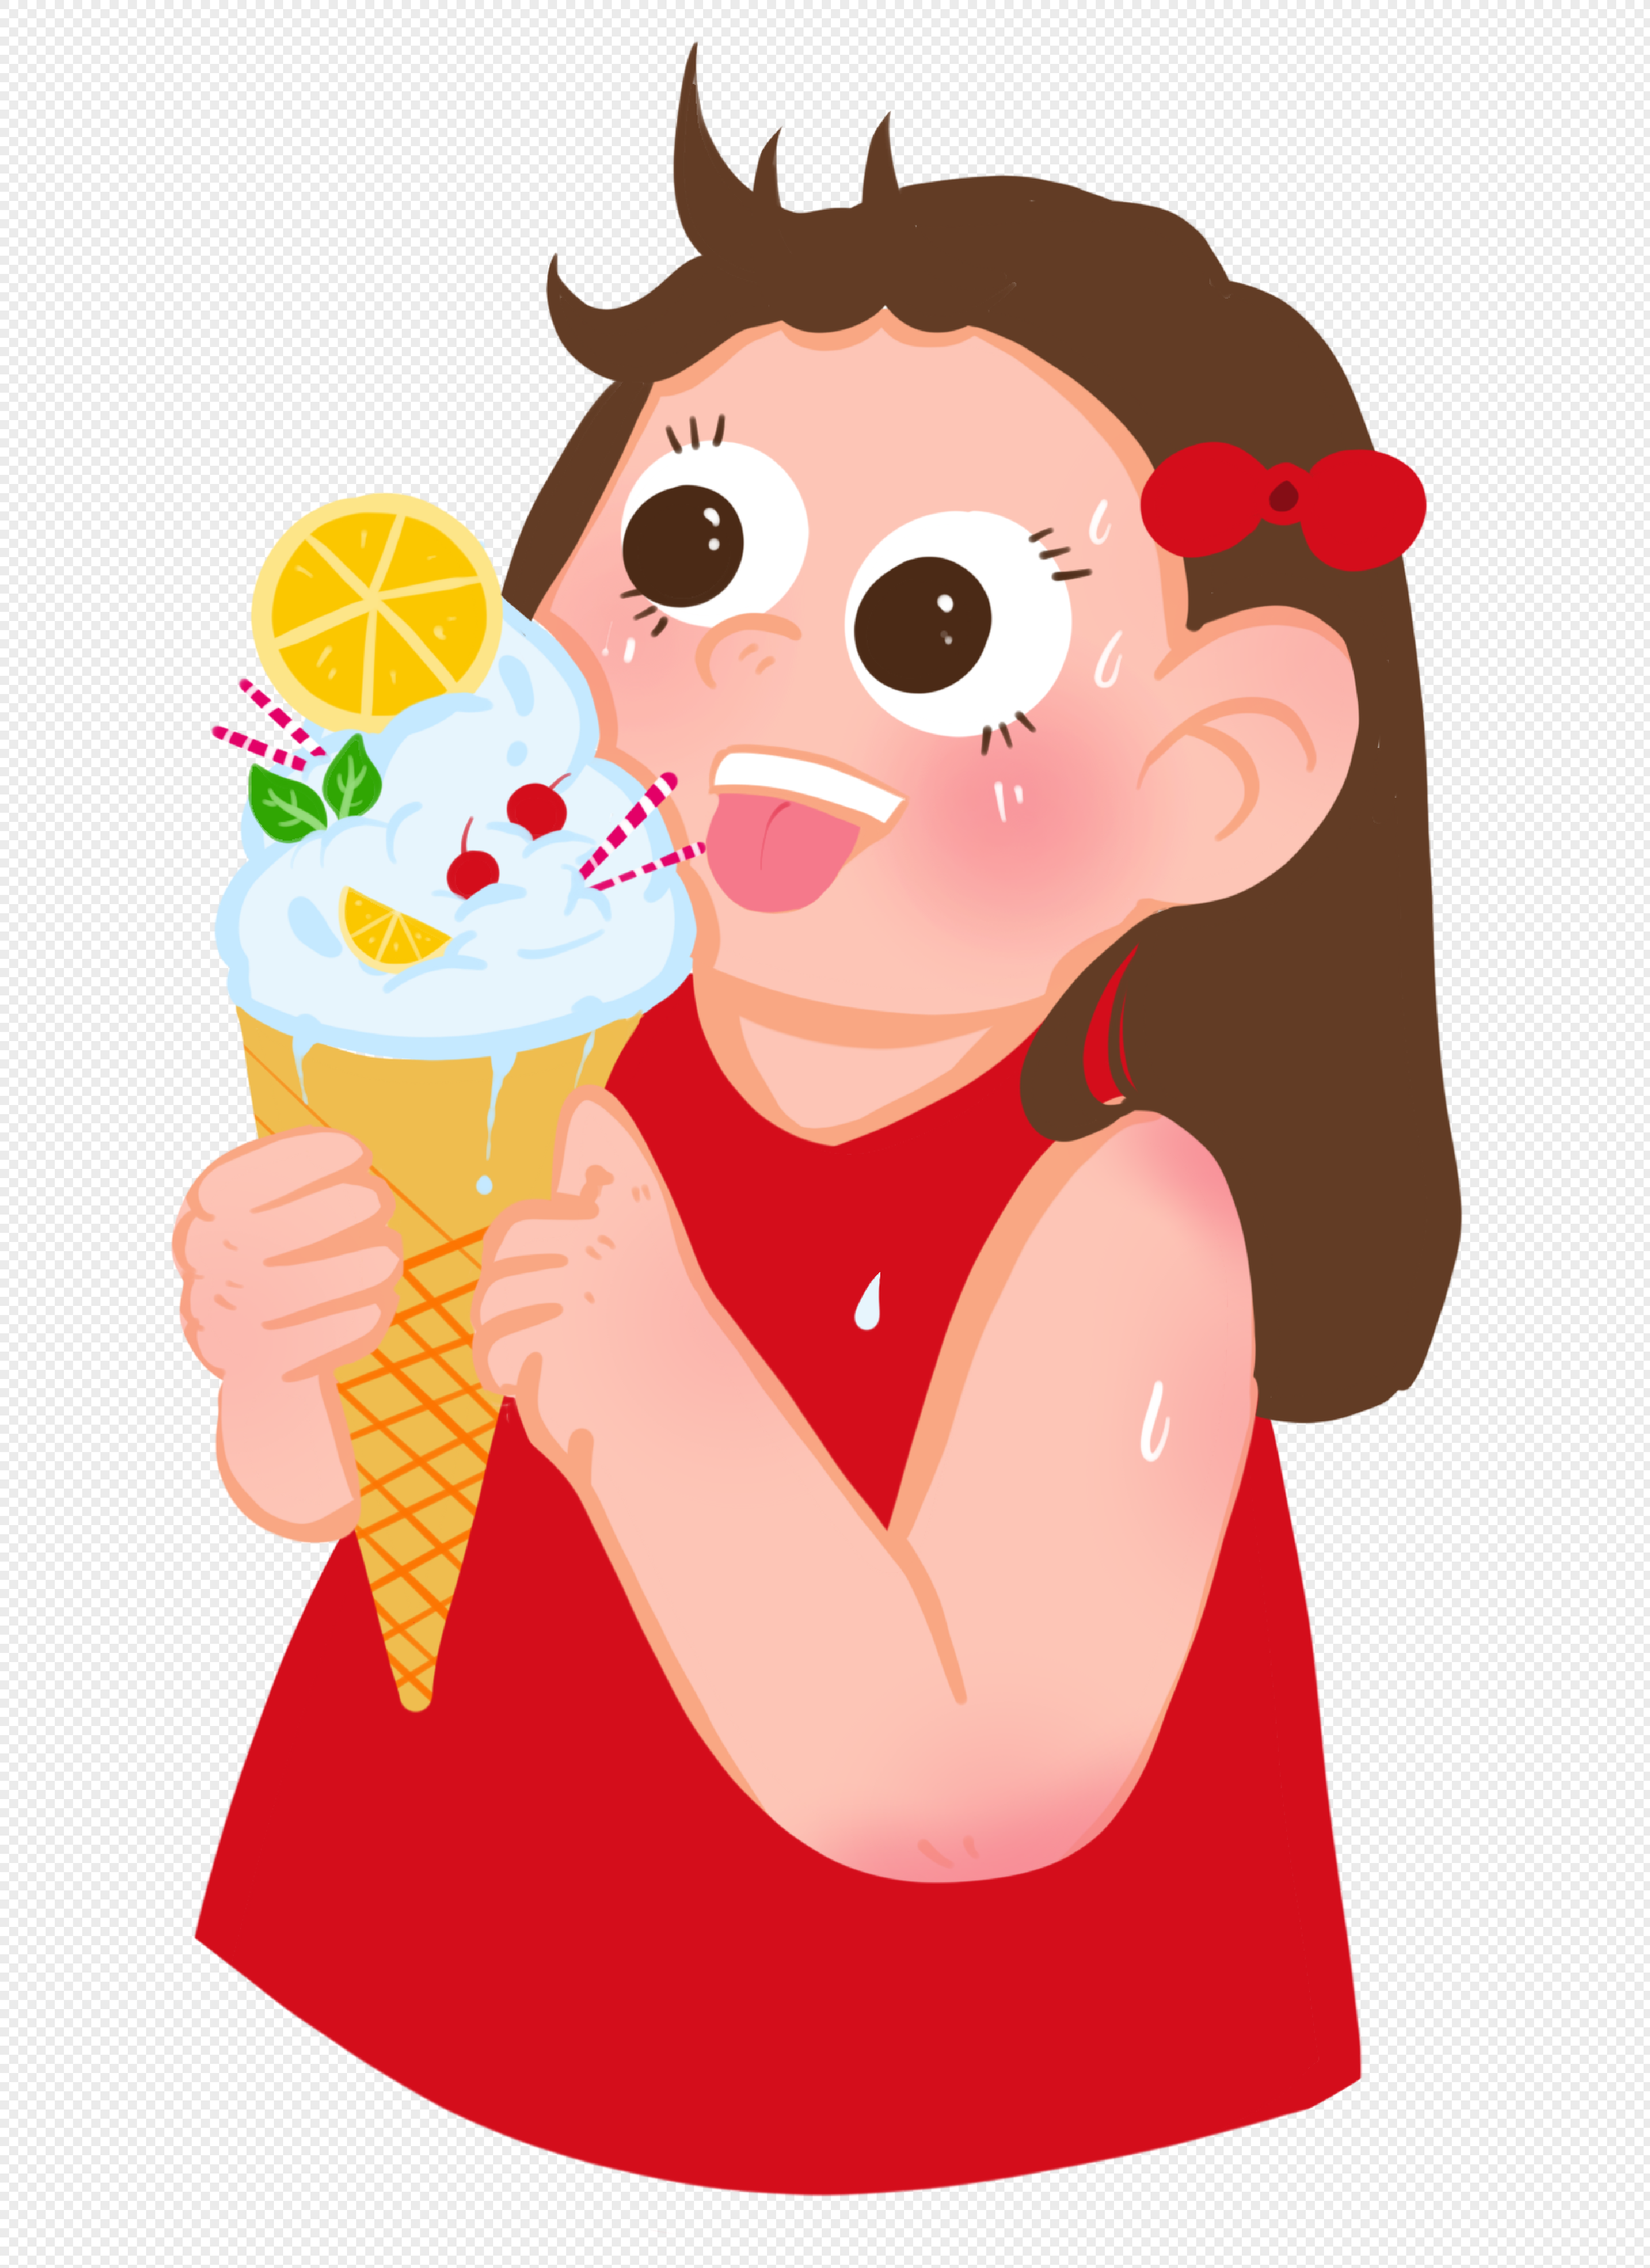 mbe风格卡通装饰冰淇淋图标图片素材免费下载 - 觅知网